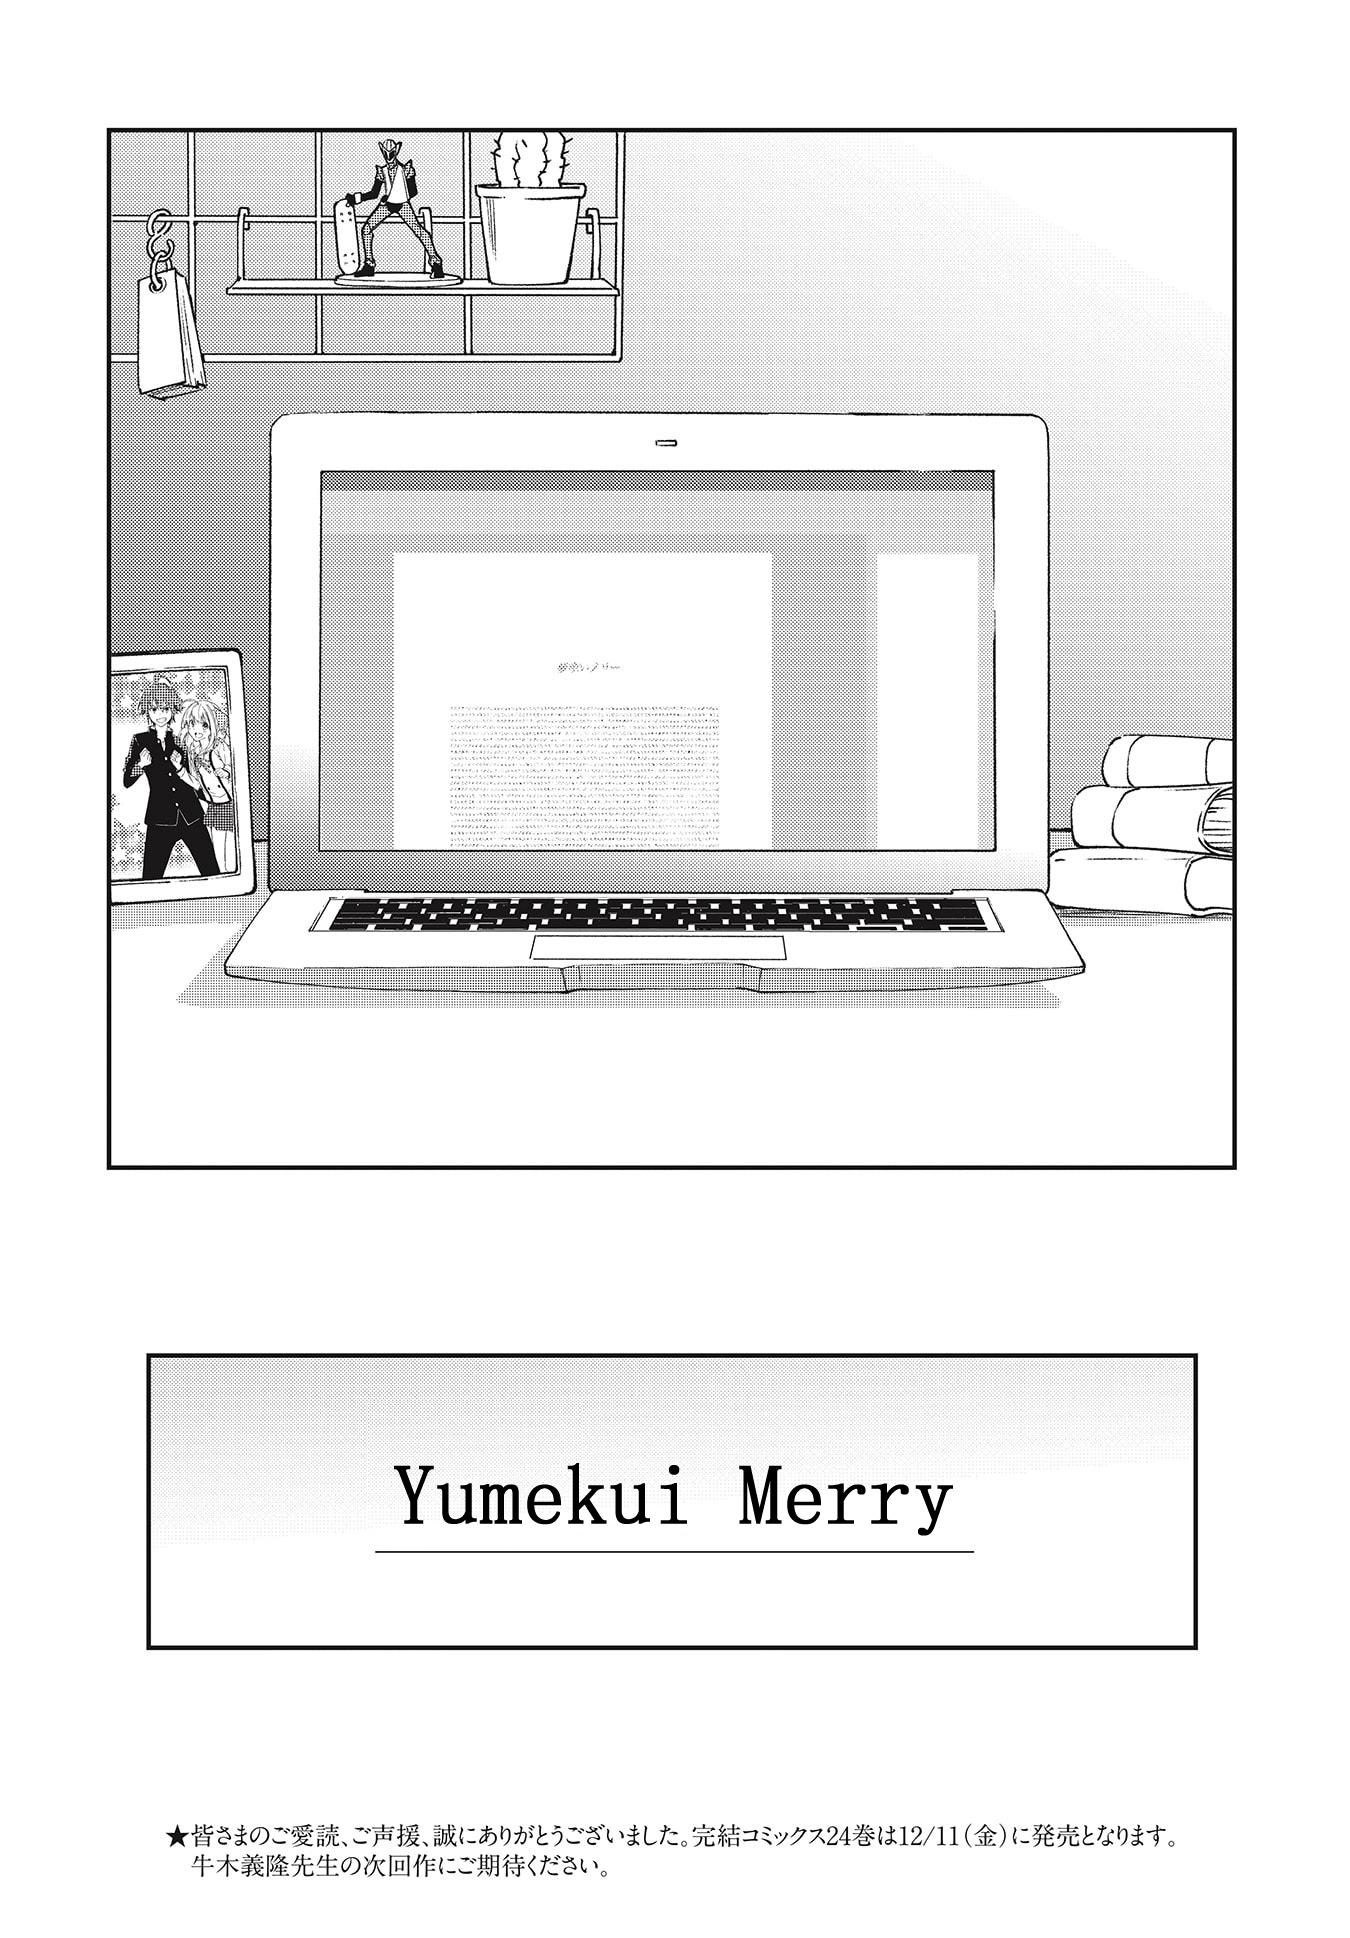 Yumekui Merry - episode 143 - 27